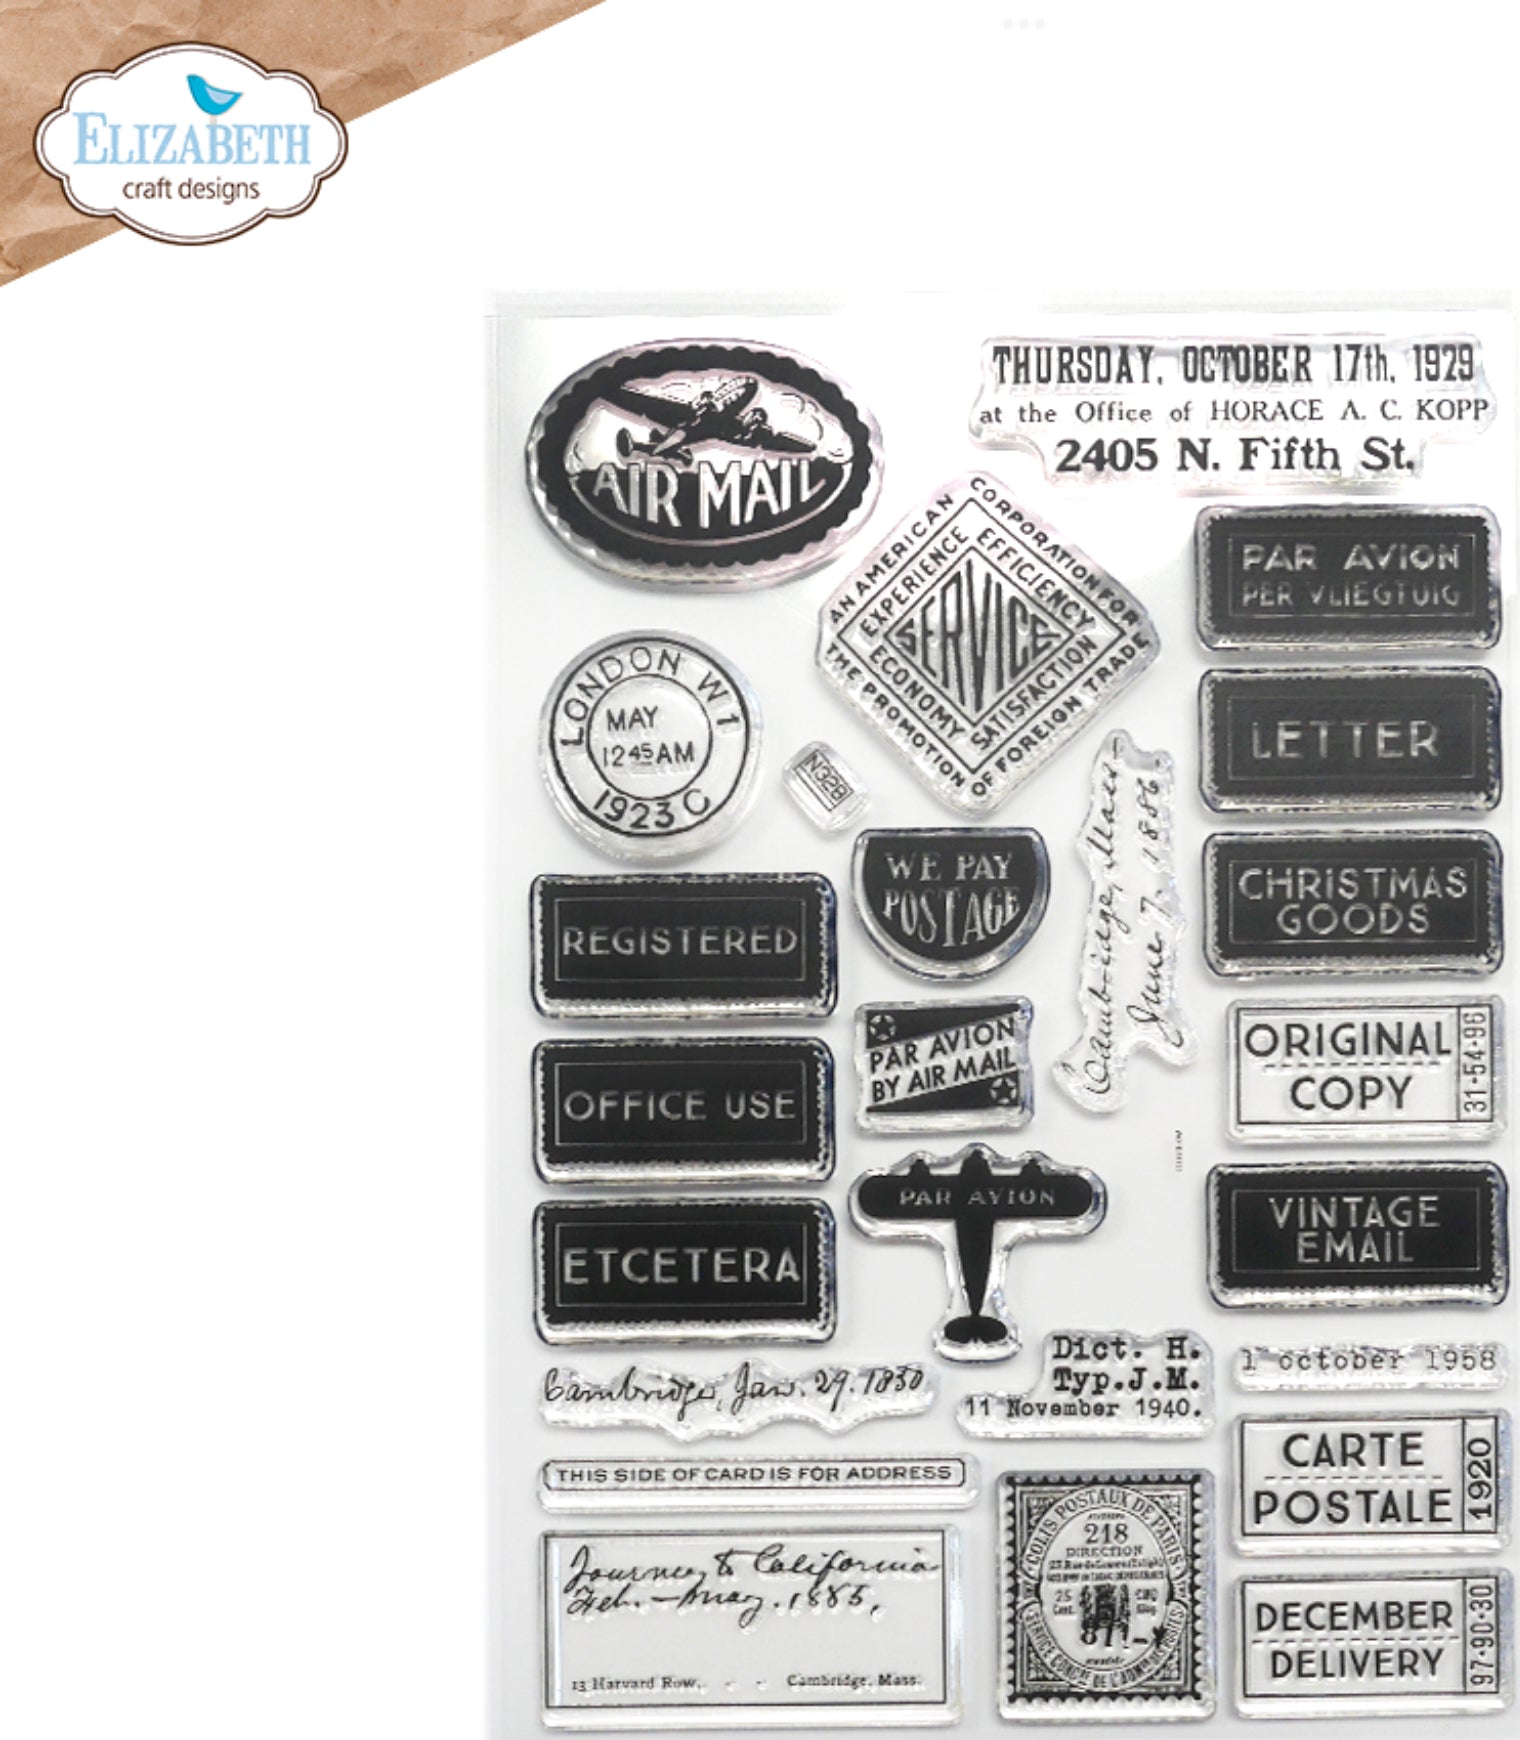 Elizabeth Craft Designs Correspondence From The Past 2 Stamp Set